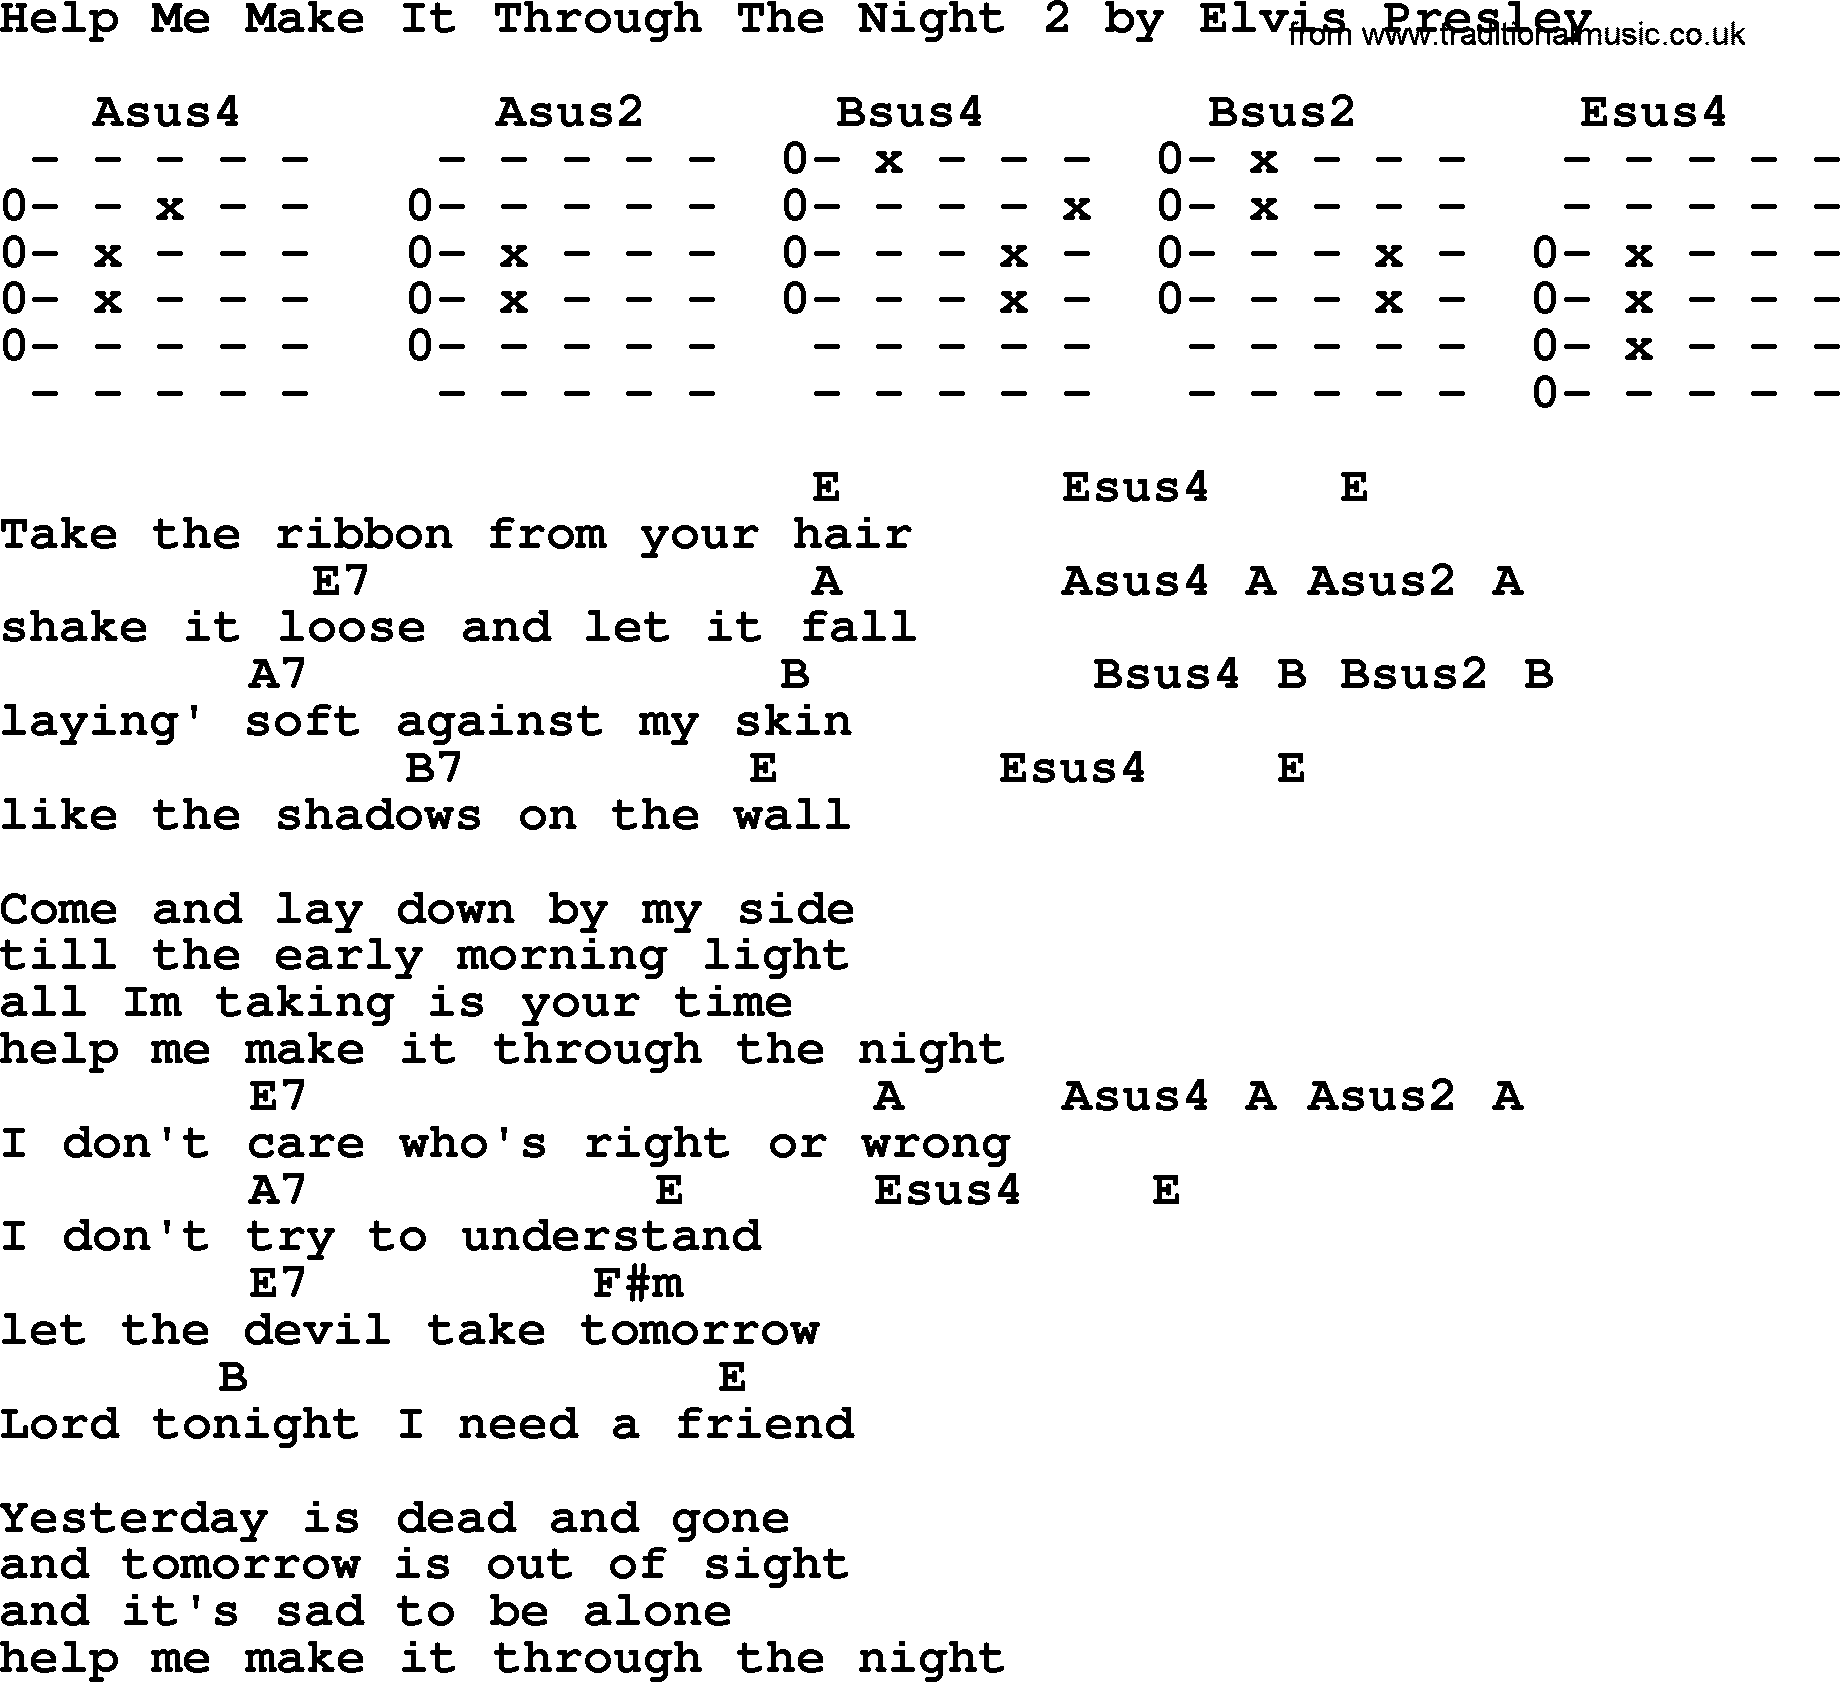 Elvis Presley song: Help Me Make It Through The Night 2, lyrics and chords